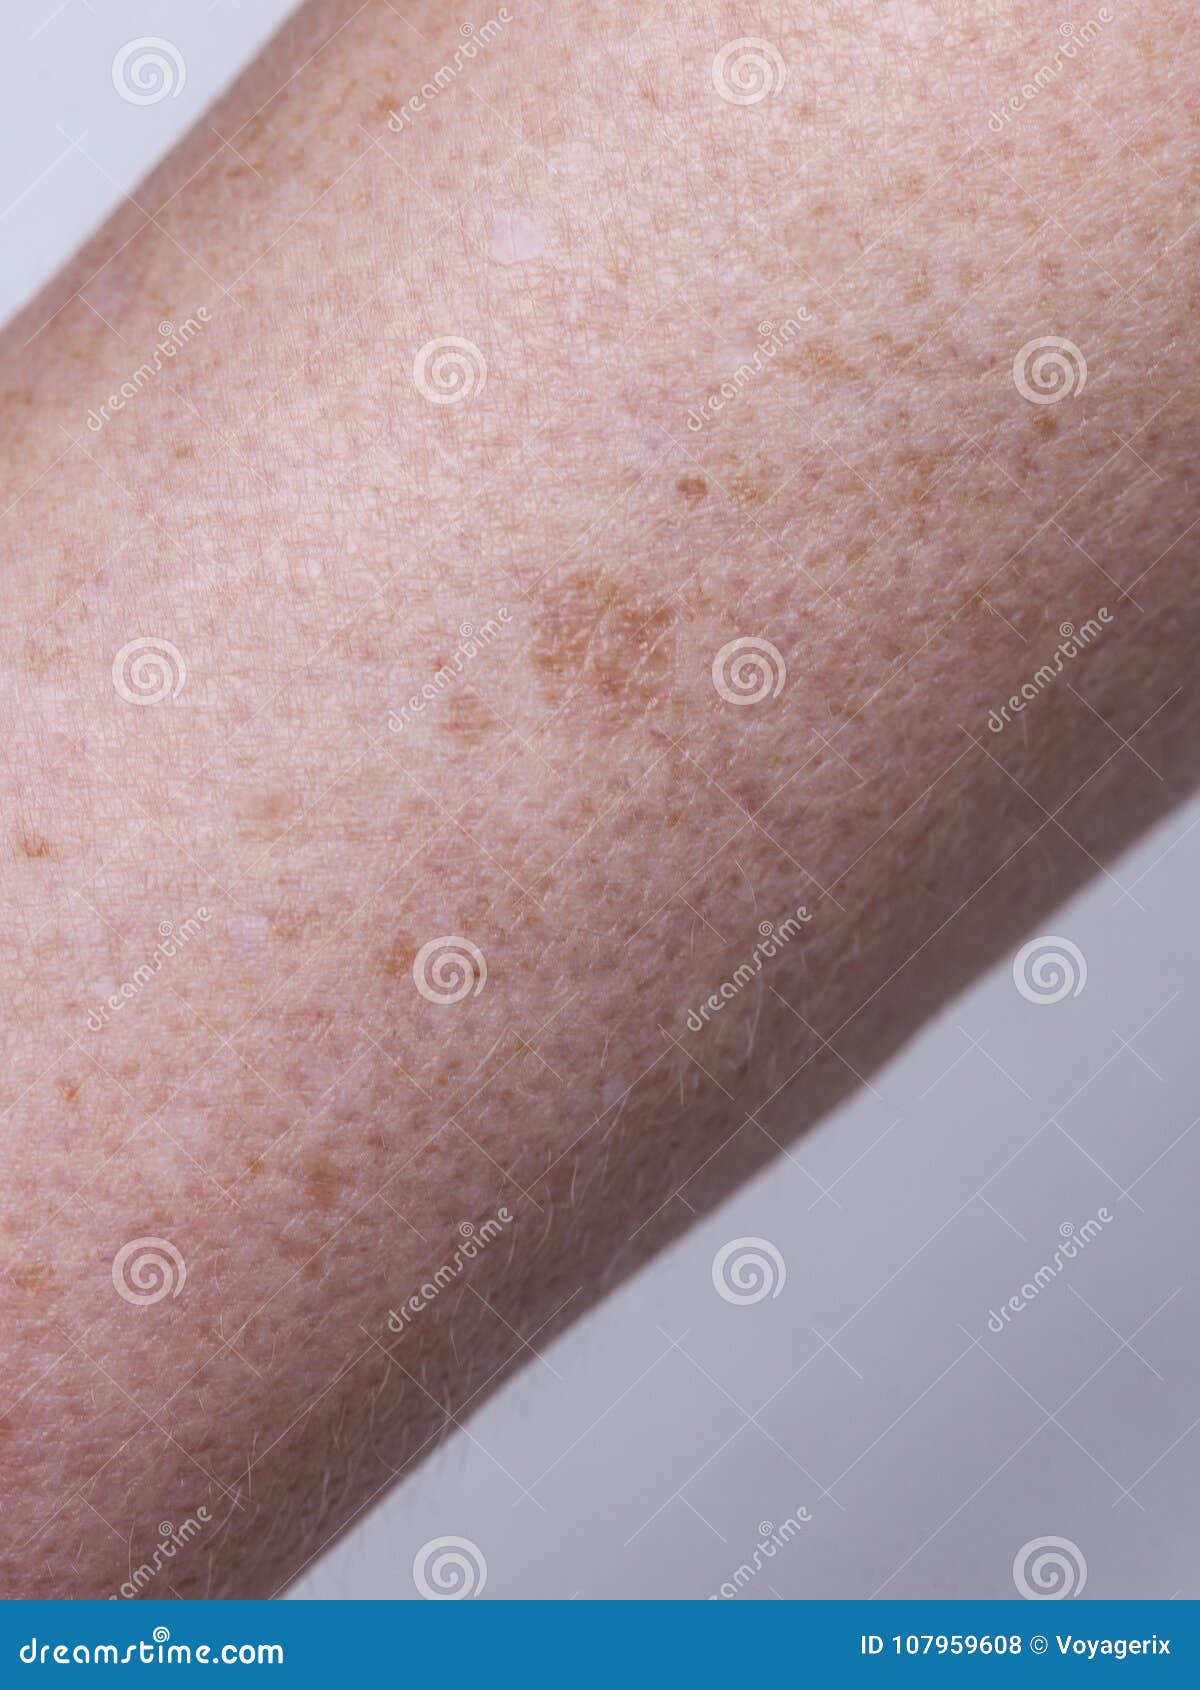 skin complexion discoloration, hyperpigmentation close up